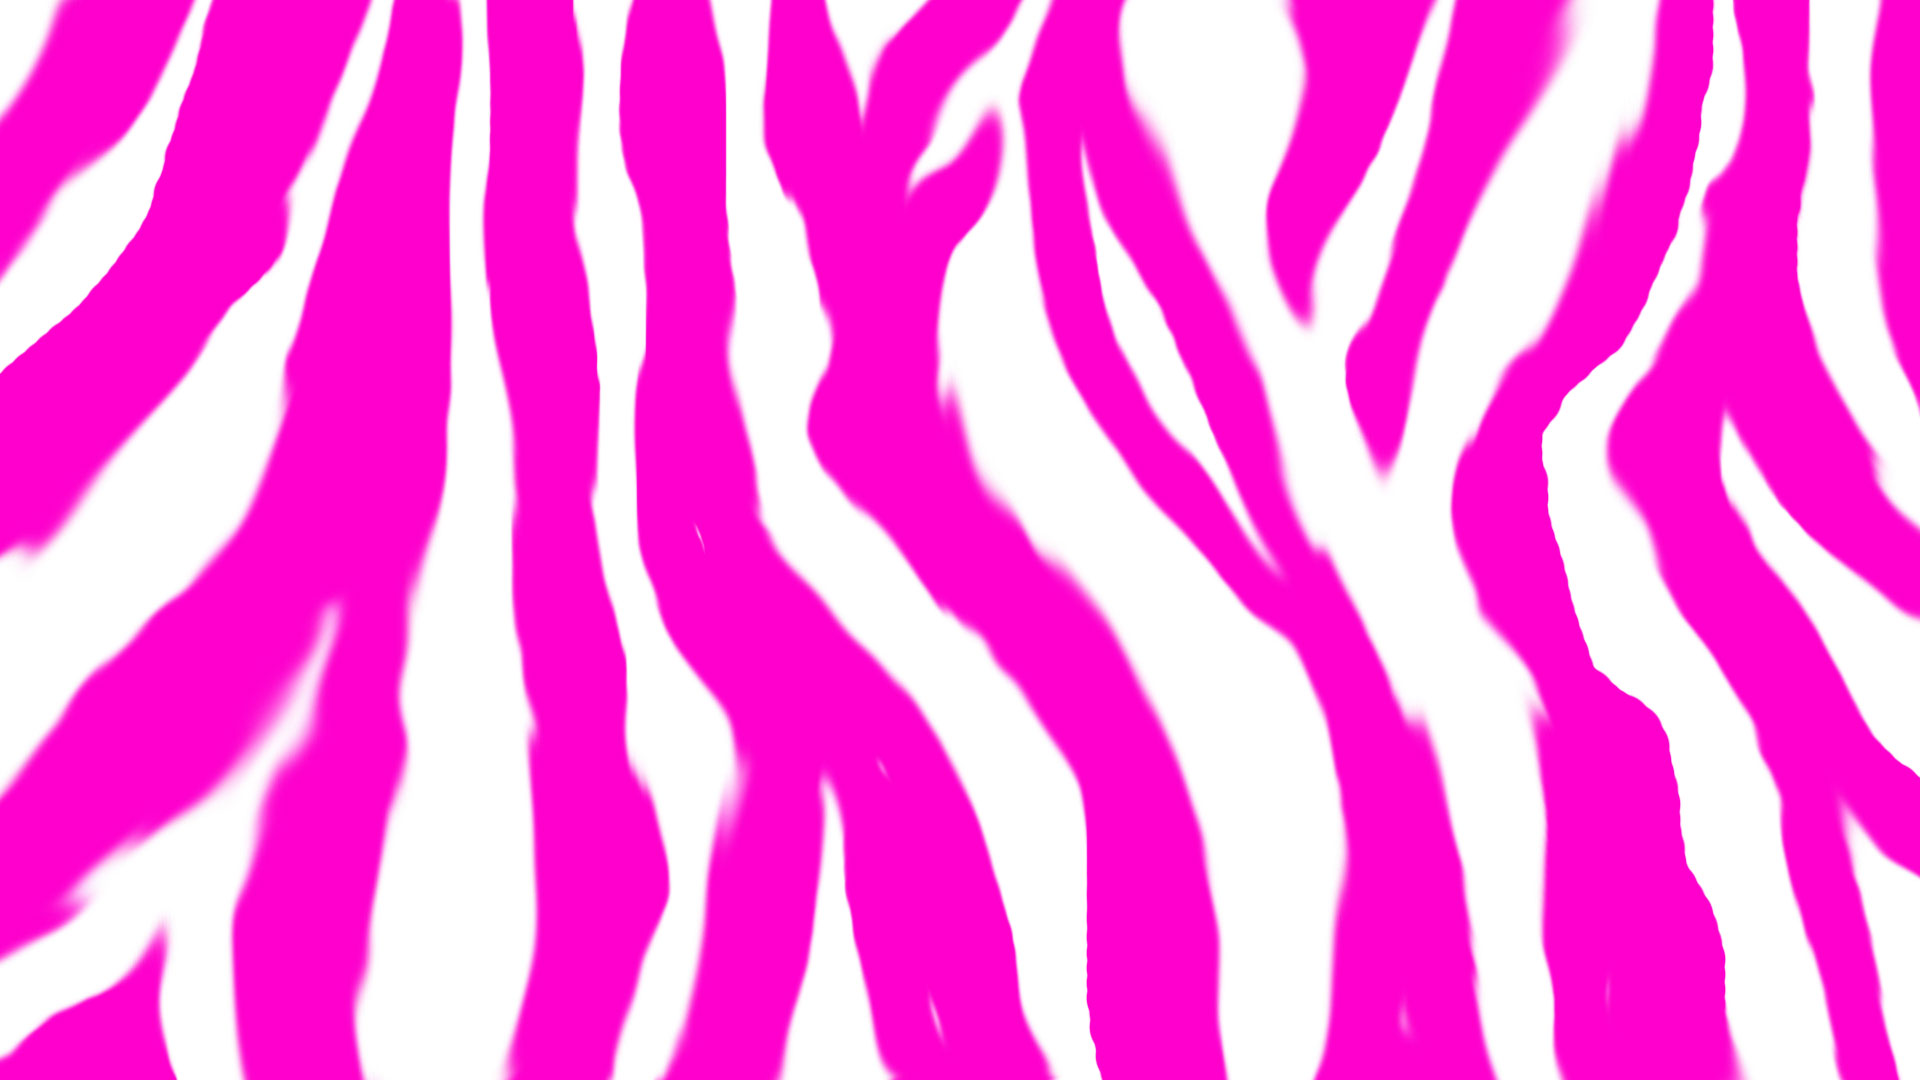 Pink Zebra Wallpaper Images & Pictures - Becuo